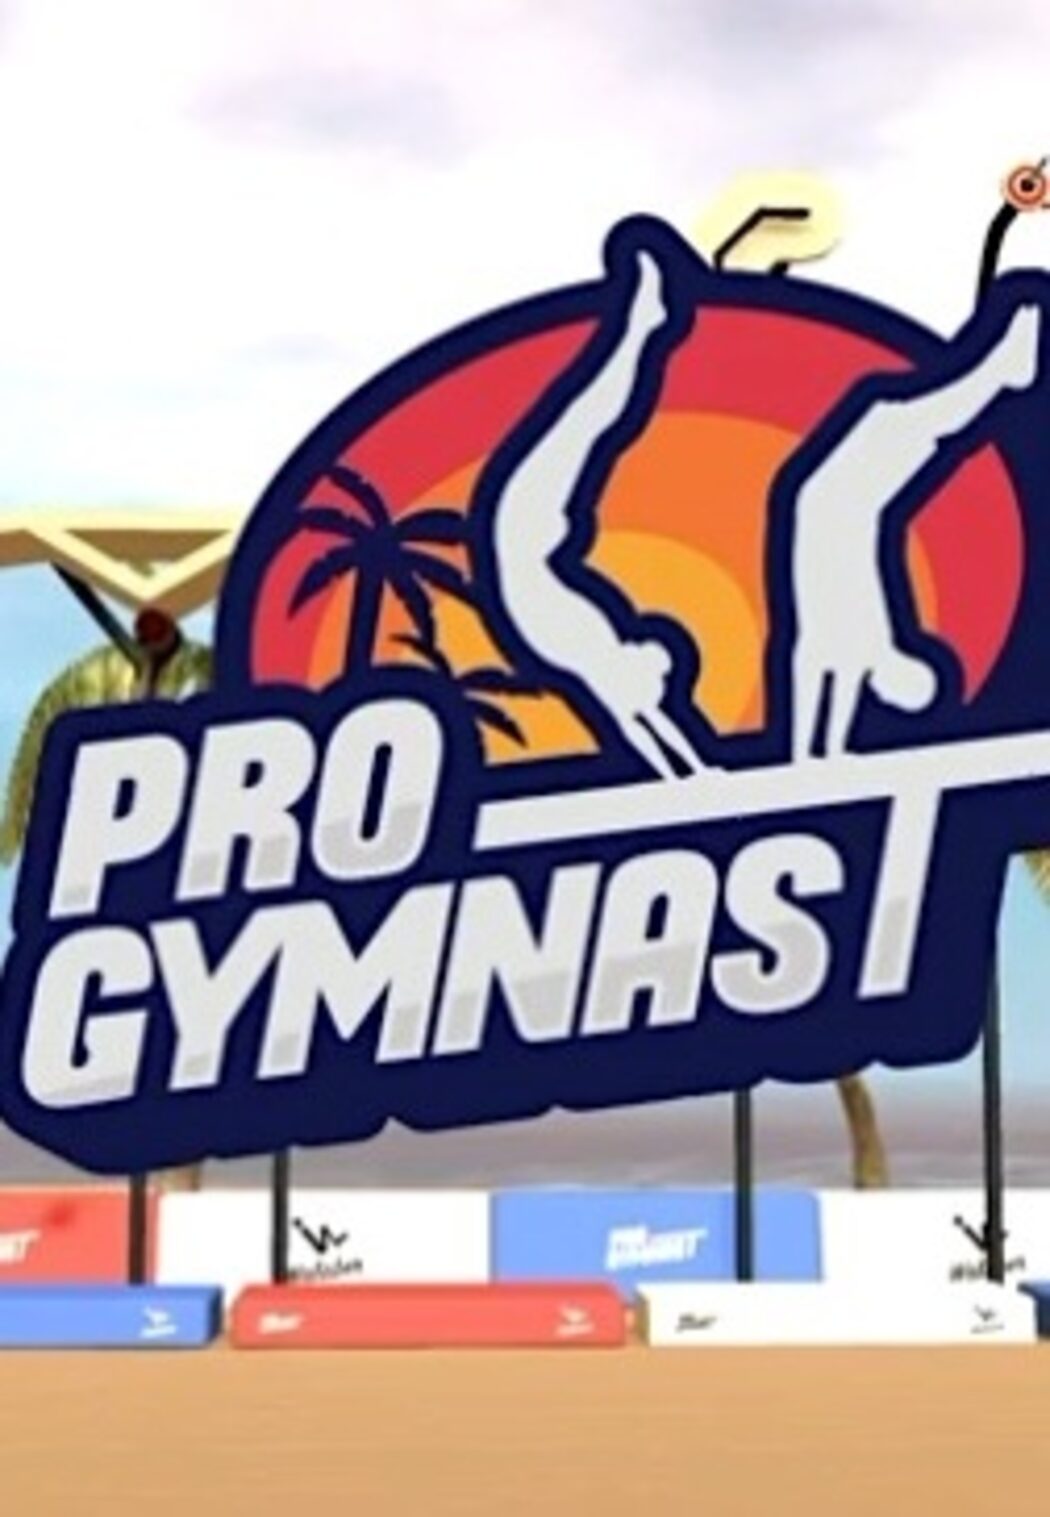 Buy Pro Gymnast Simulator